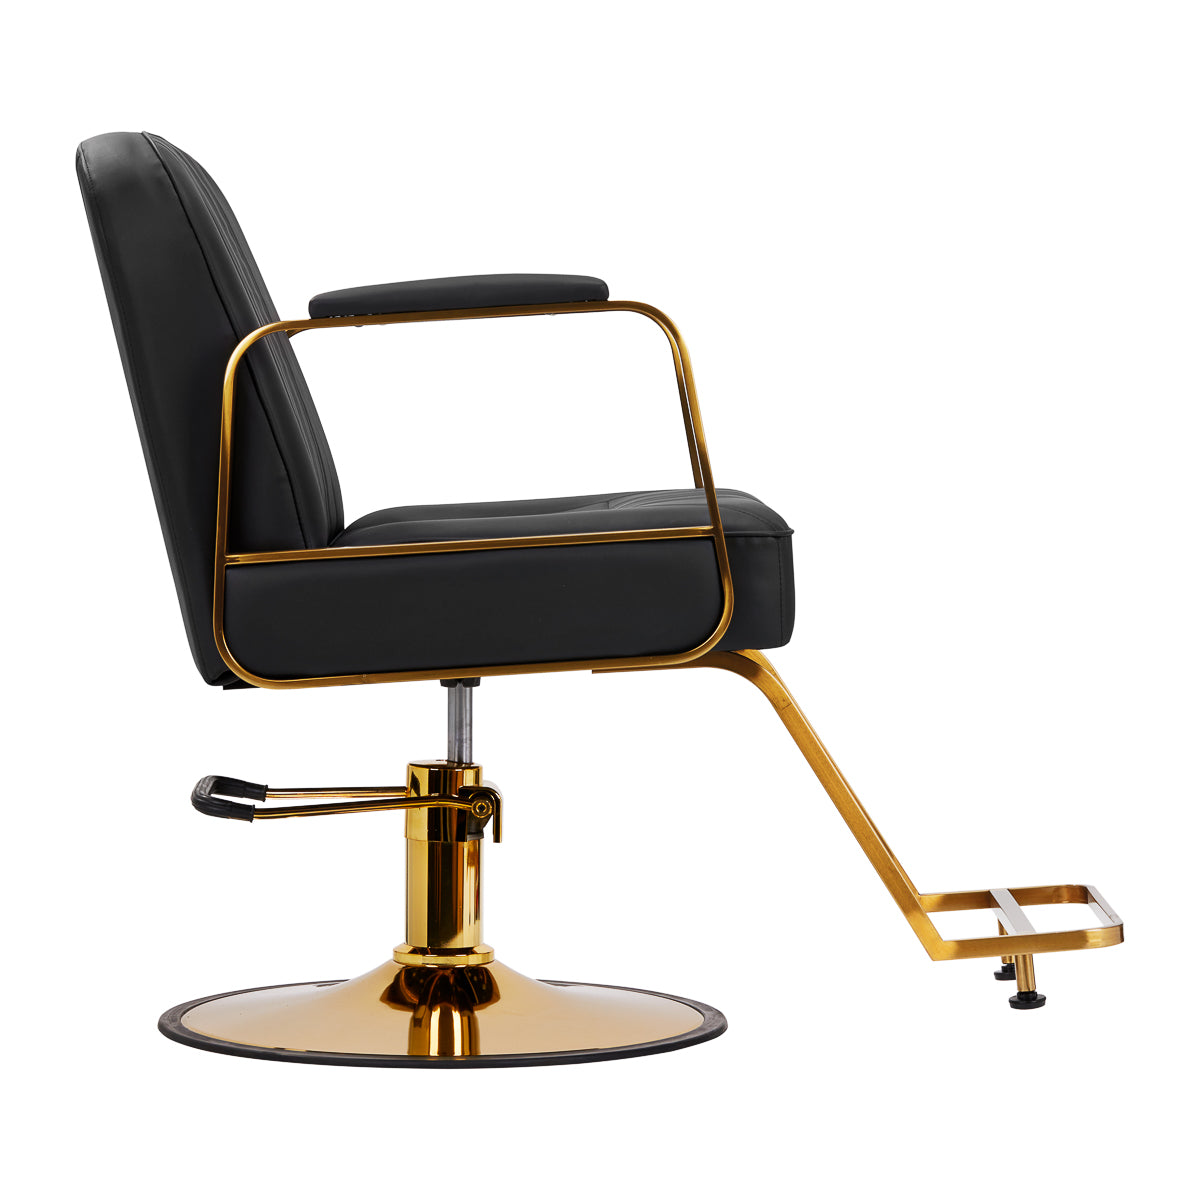 Gabbiano hairdressing chair Acri gold - black 